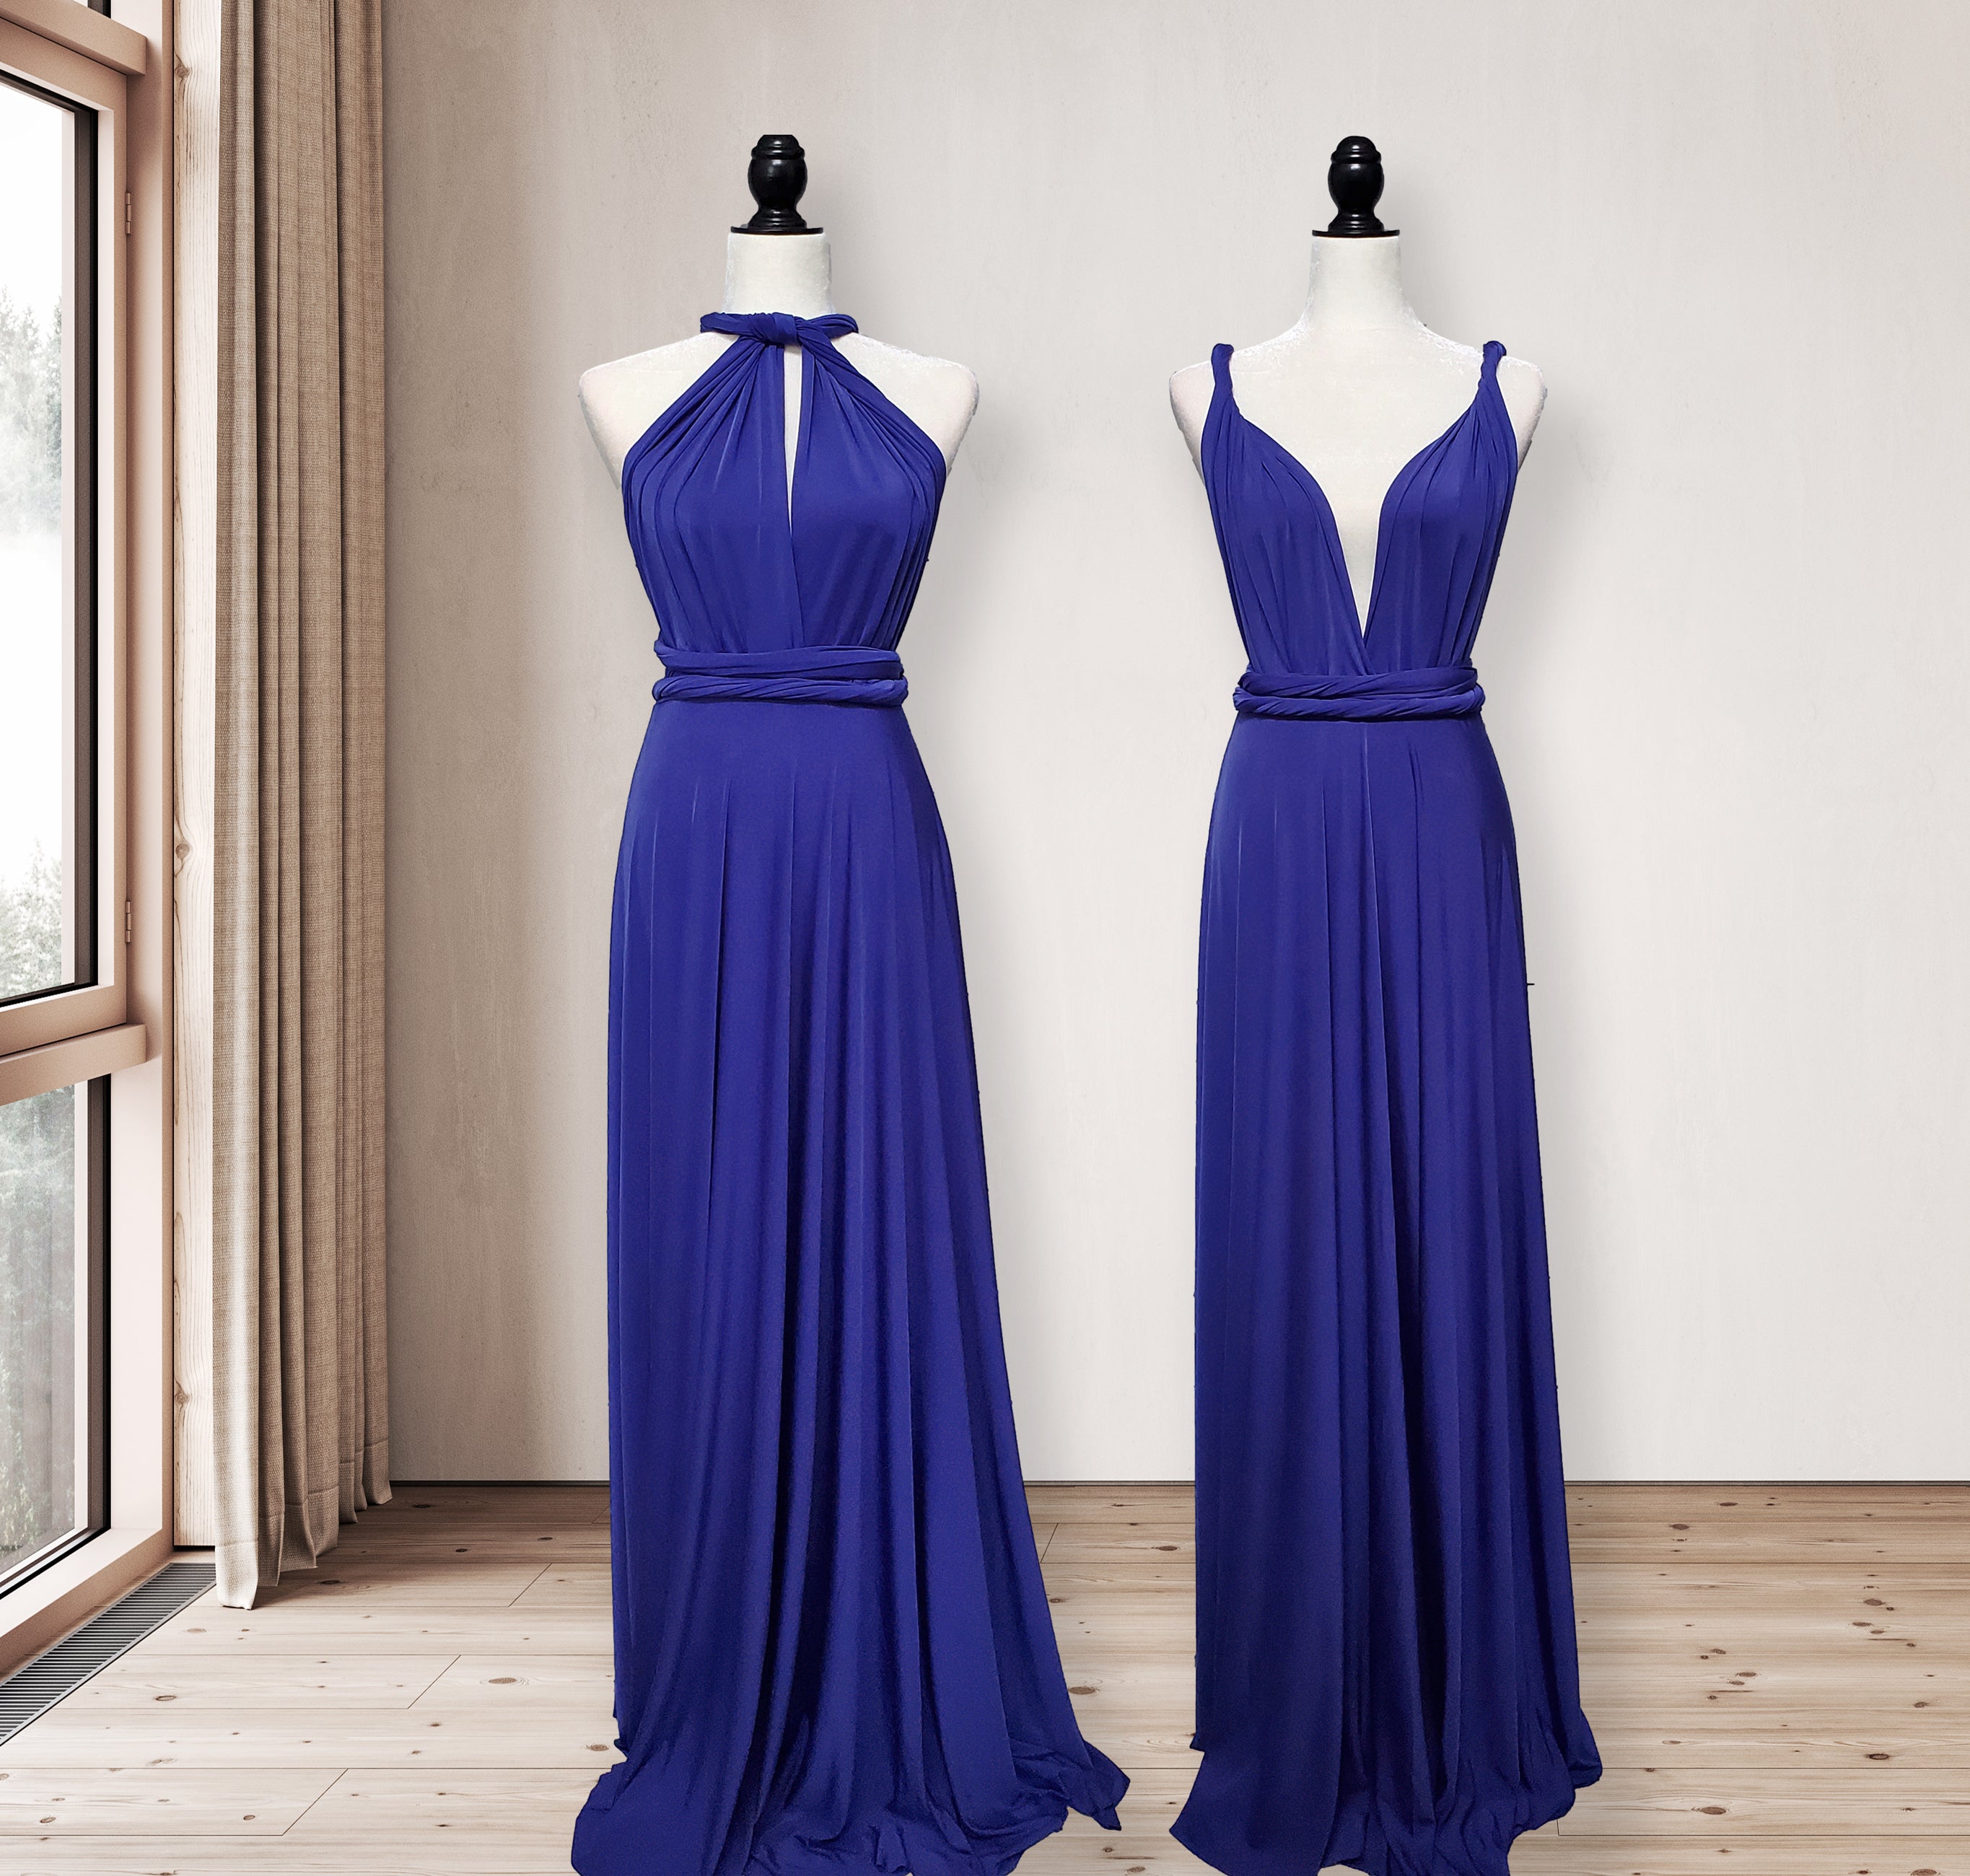 Indigo Blue Infinity Dress Multiway Bridesmaid Dress Convertible Made in USA